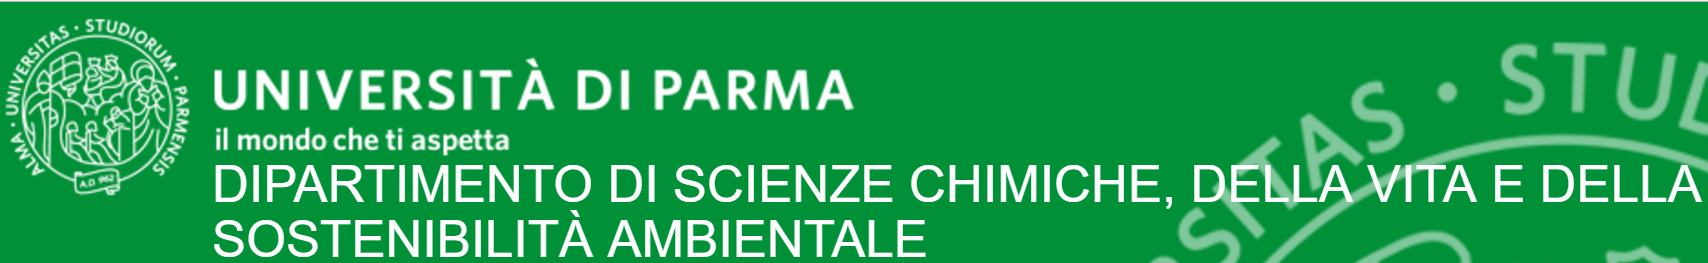 Univ_Parma_Chimica_Vita